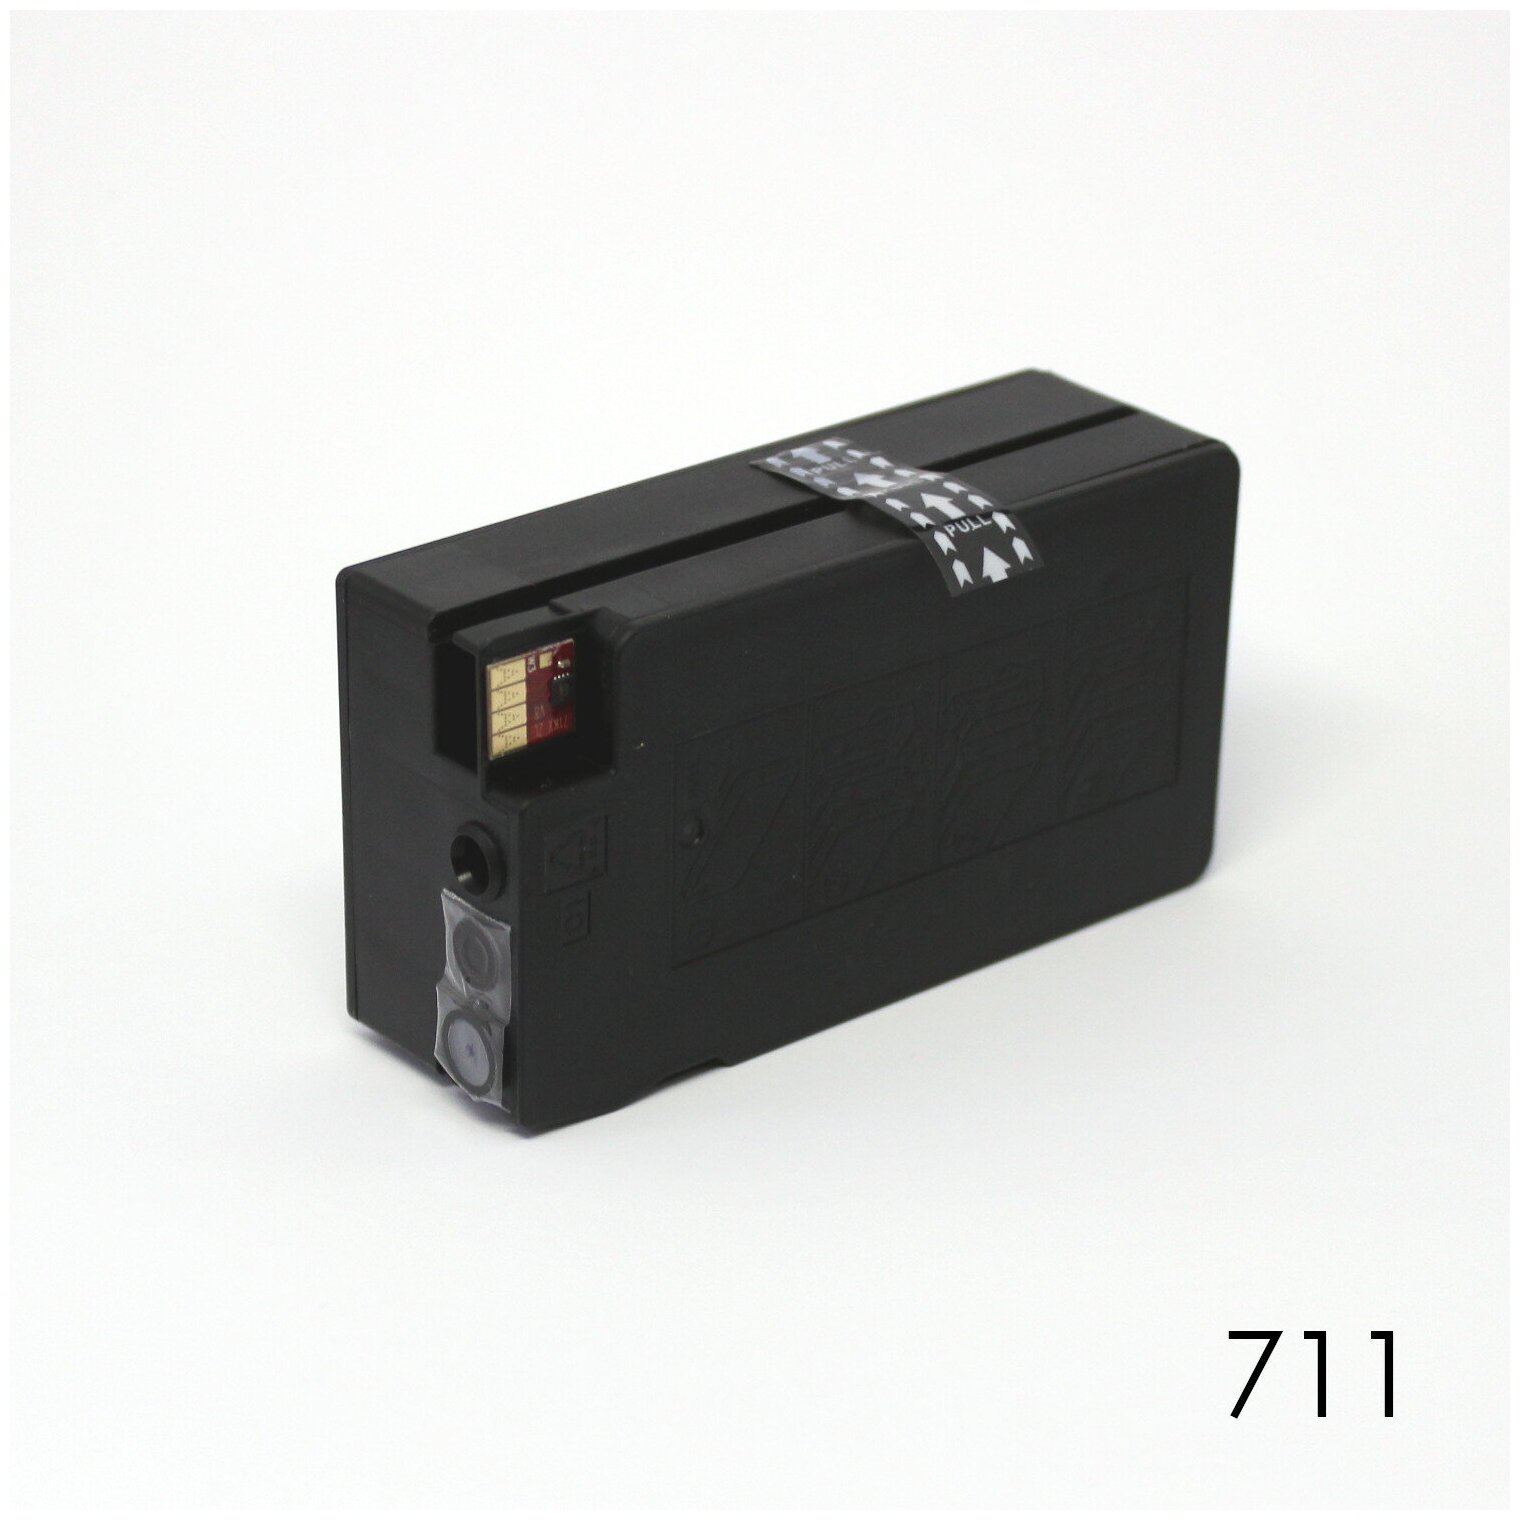 Картридж чёрный для HP Designjet T120, T125, T130, T520, T525, T530 (под HP 711, 711XL Black), неоригинальный, im. H-711. B. label